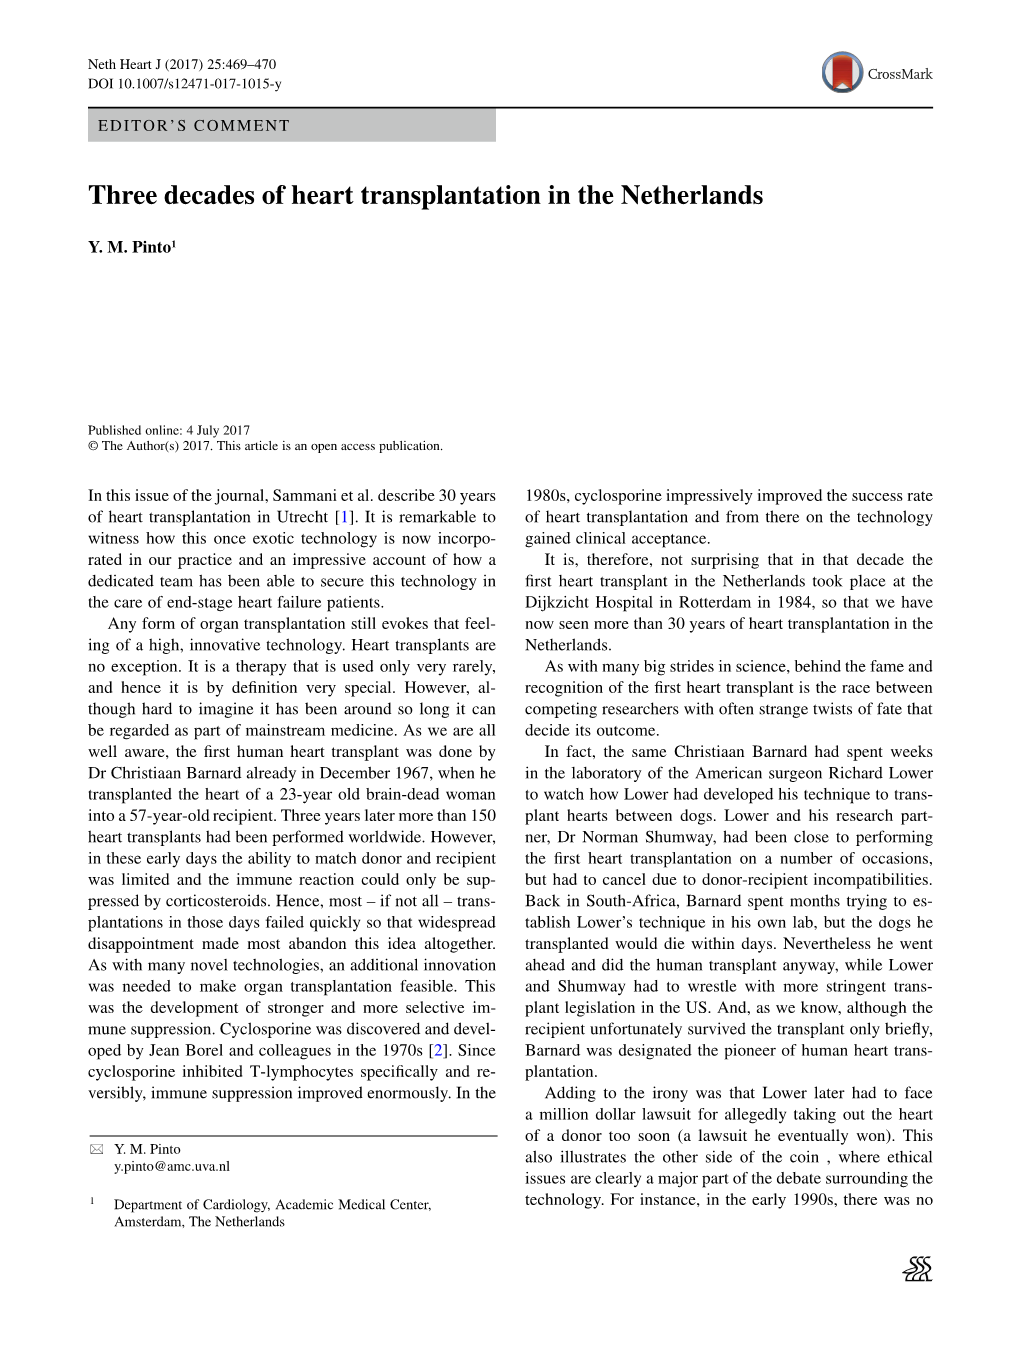 Three Decades of Heart Transplantation in the Netherlands